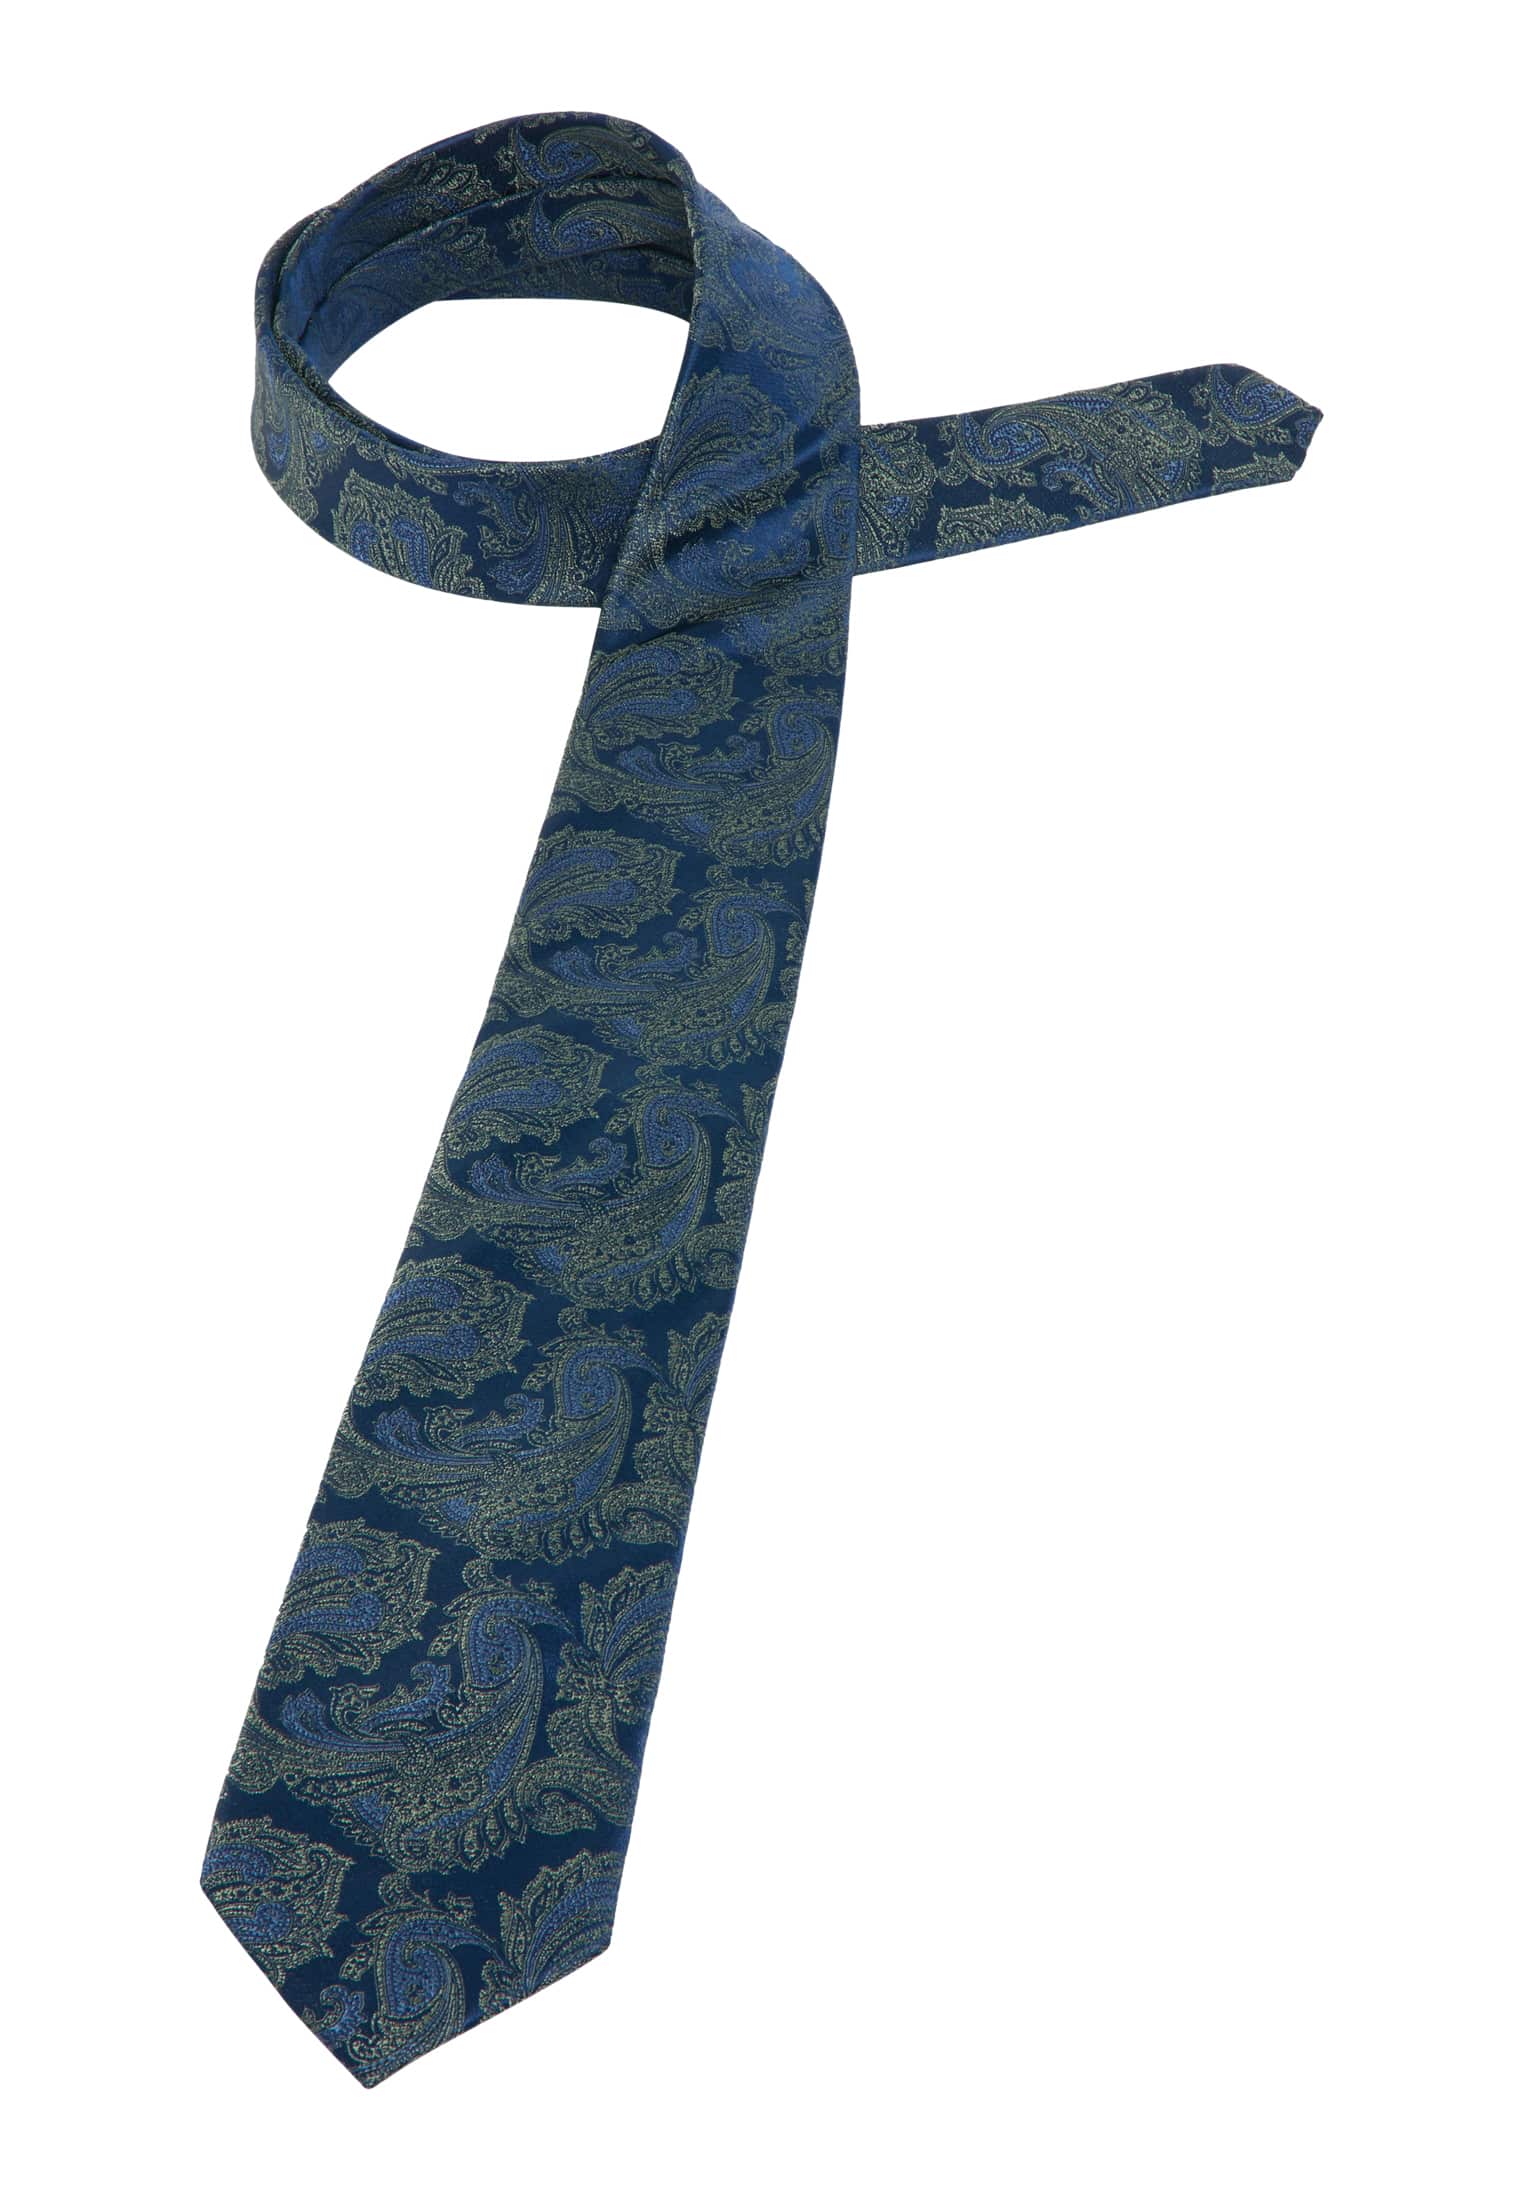 Krawatte in gemustert | | | 1AC01884-81-48-142 blau/grün 142 blau/grün